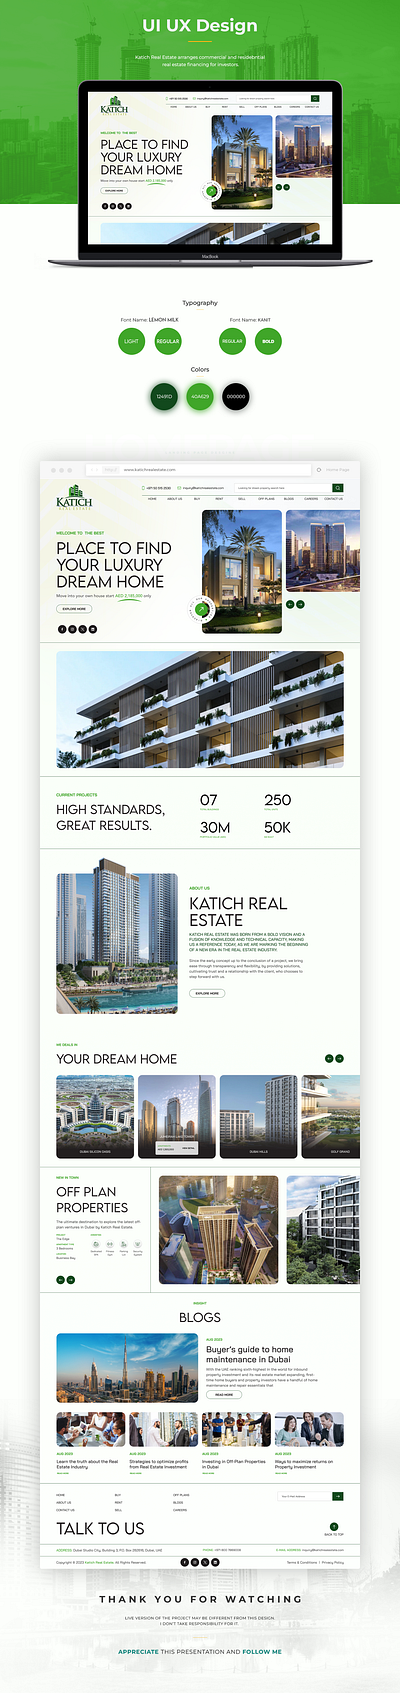 Katich Real Estate real estate ui